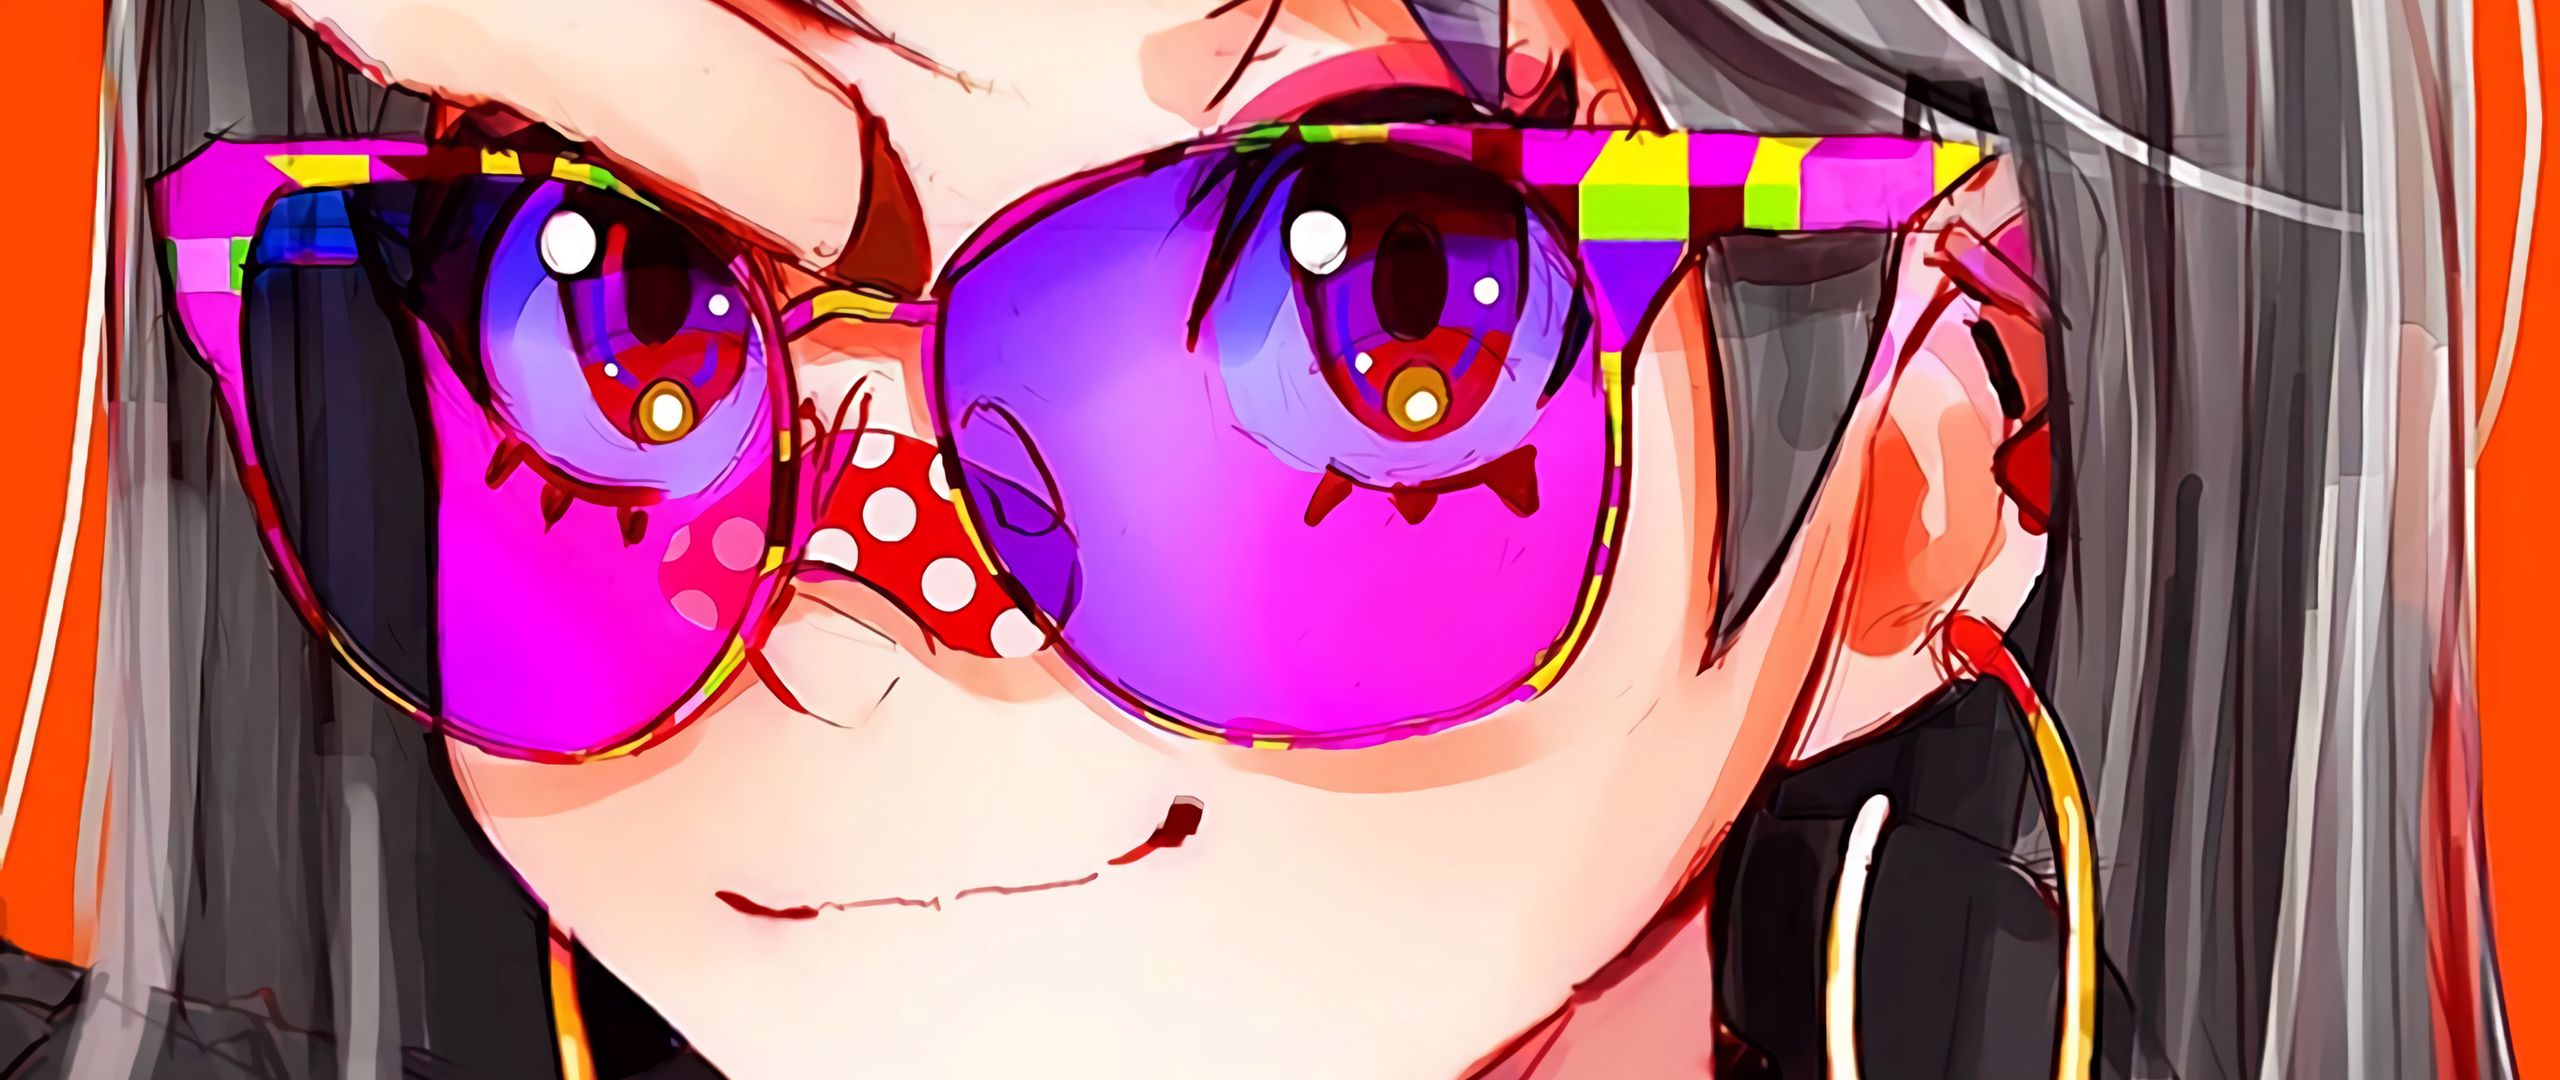 Wallpaper Anime girl with glasses